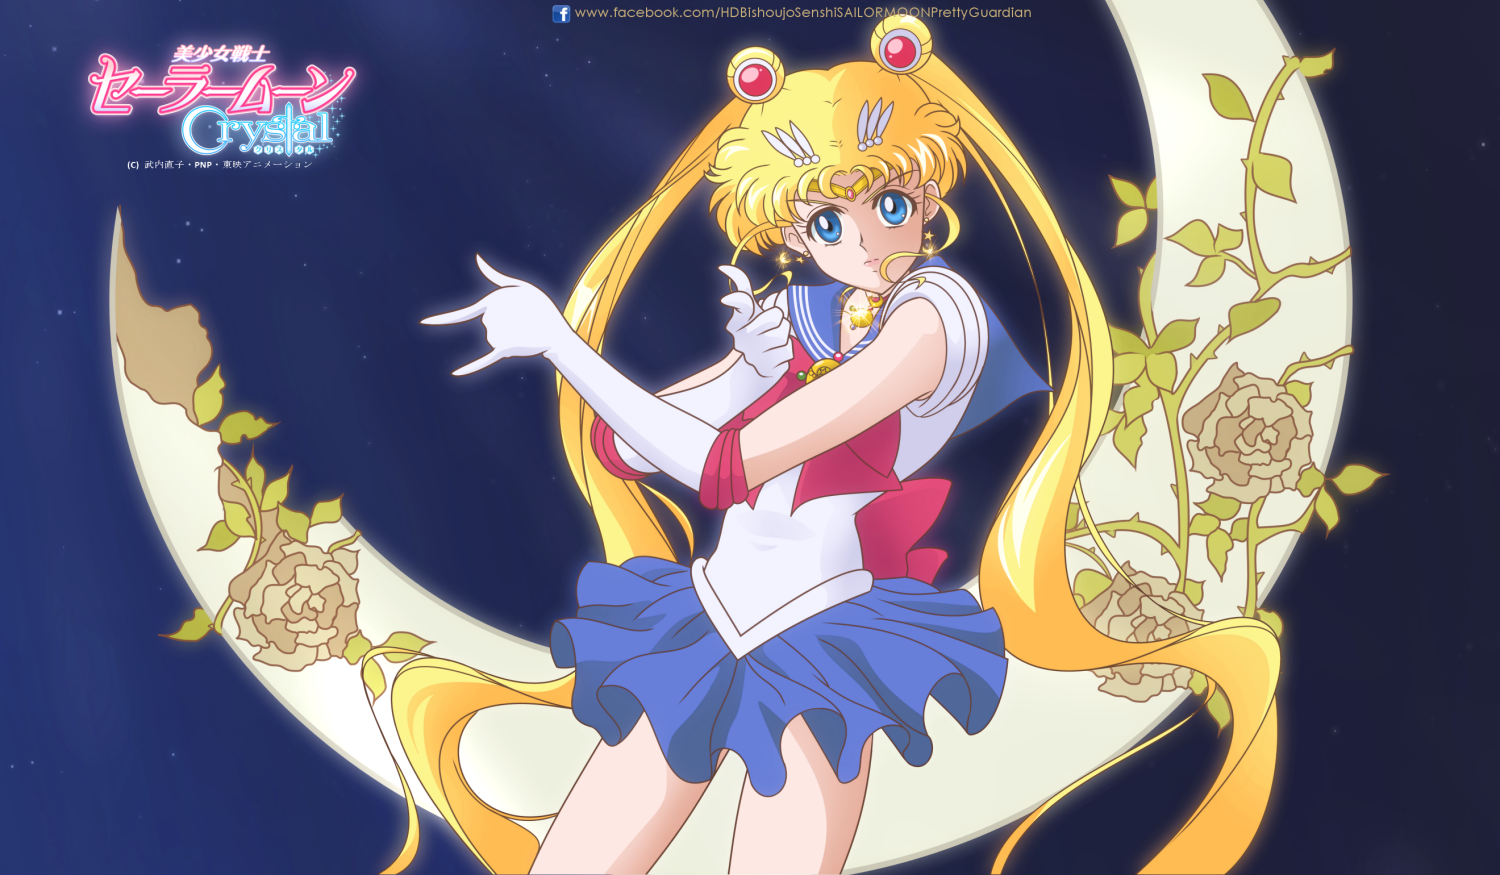 Sialor Moon Crystal Season 2  Sailor moon wallpaper, Sailor moon crystal, Sailor  moon stars